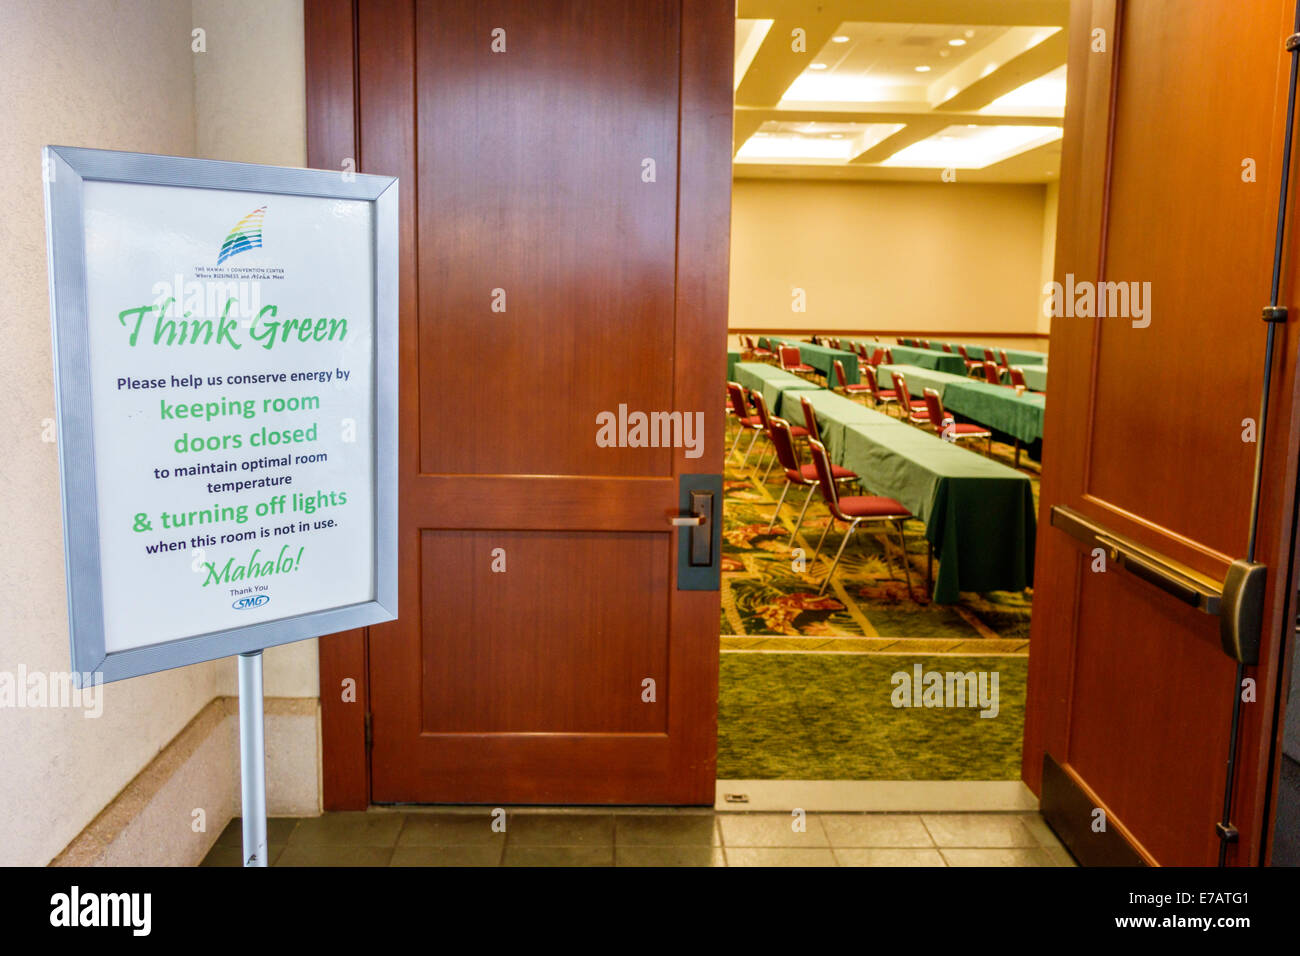 Hawaii, Hawaiian, Oahu, Honolulu, Kongresszentrum, Zentrum, innen, Eingang zum Konferenzraum, Schild, grün denken, Energie sparen, Türen geschlossen halten Stockfoto